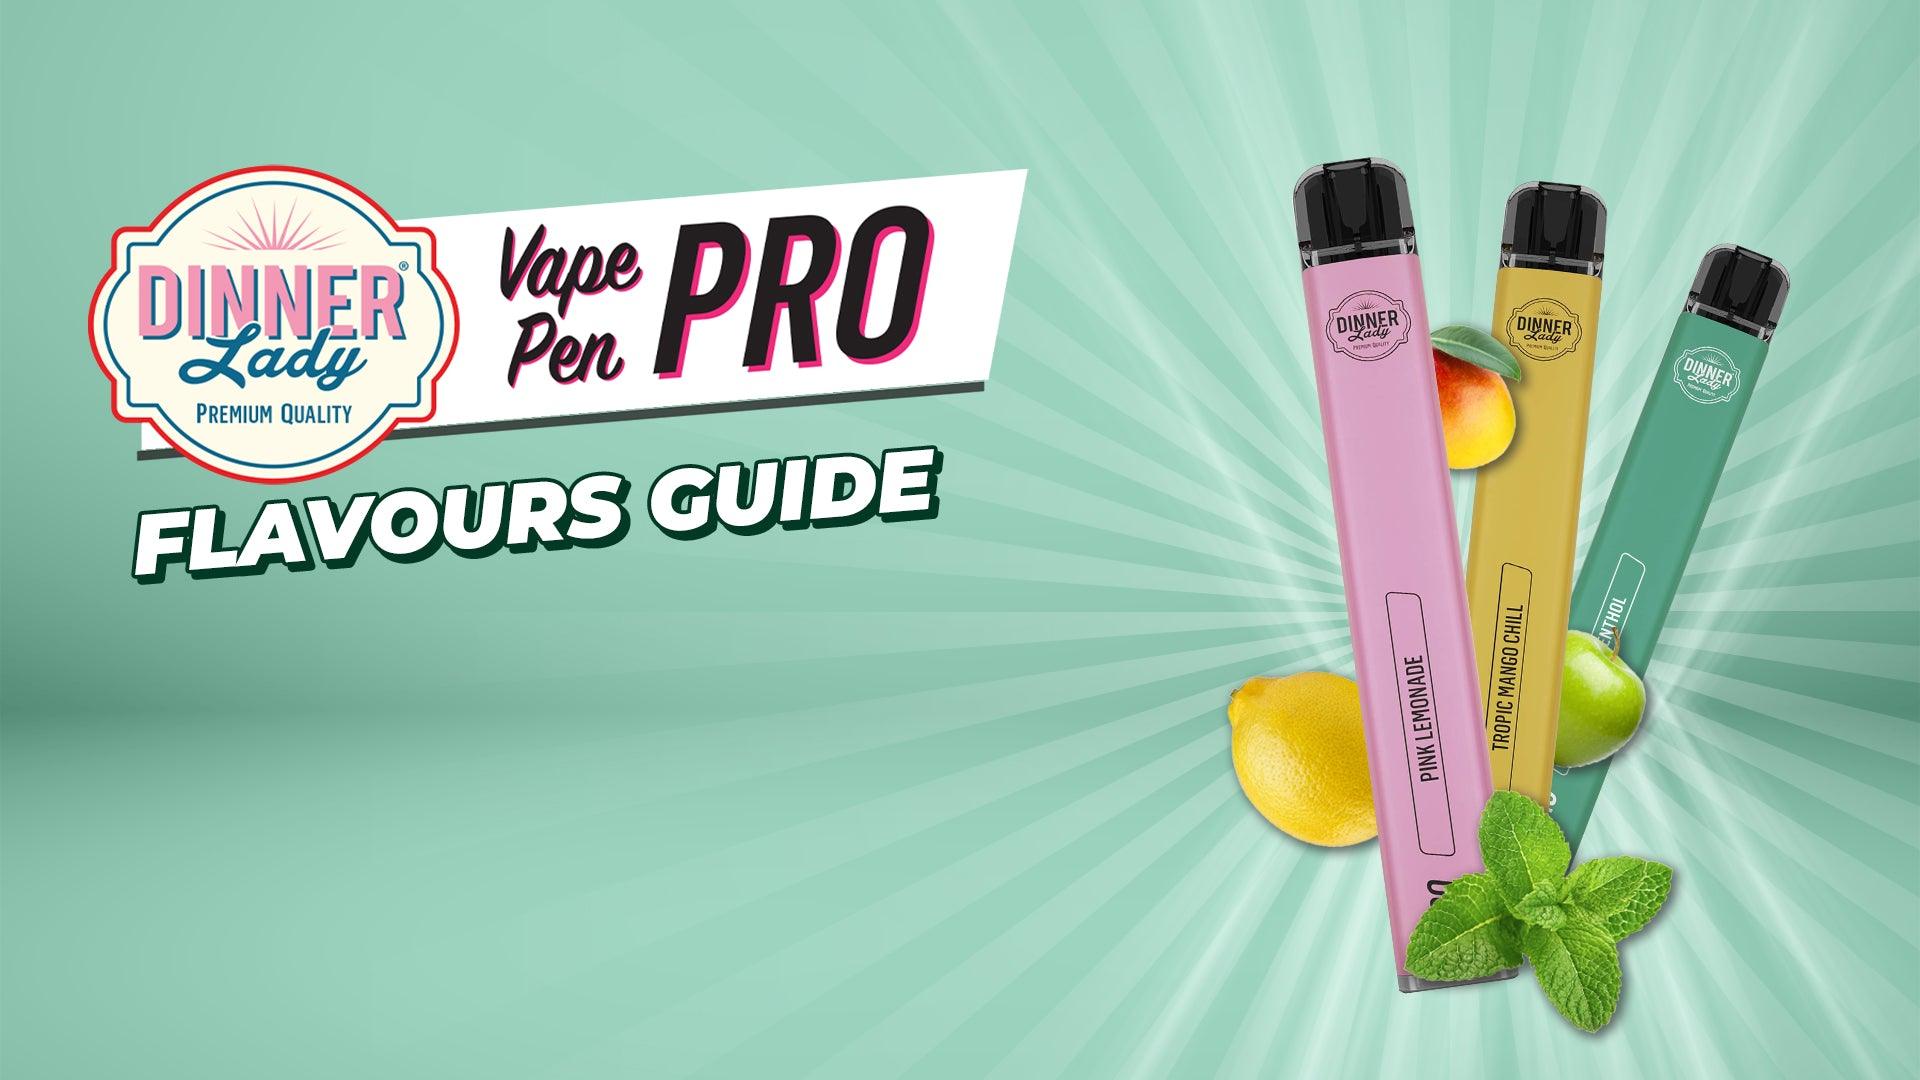 Dinner Lady Vape Pen Pro Flavour Guide - Brand:Dinner Lady, Category:Vape Kits, Sub Category:Disposables